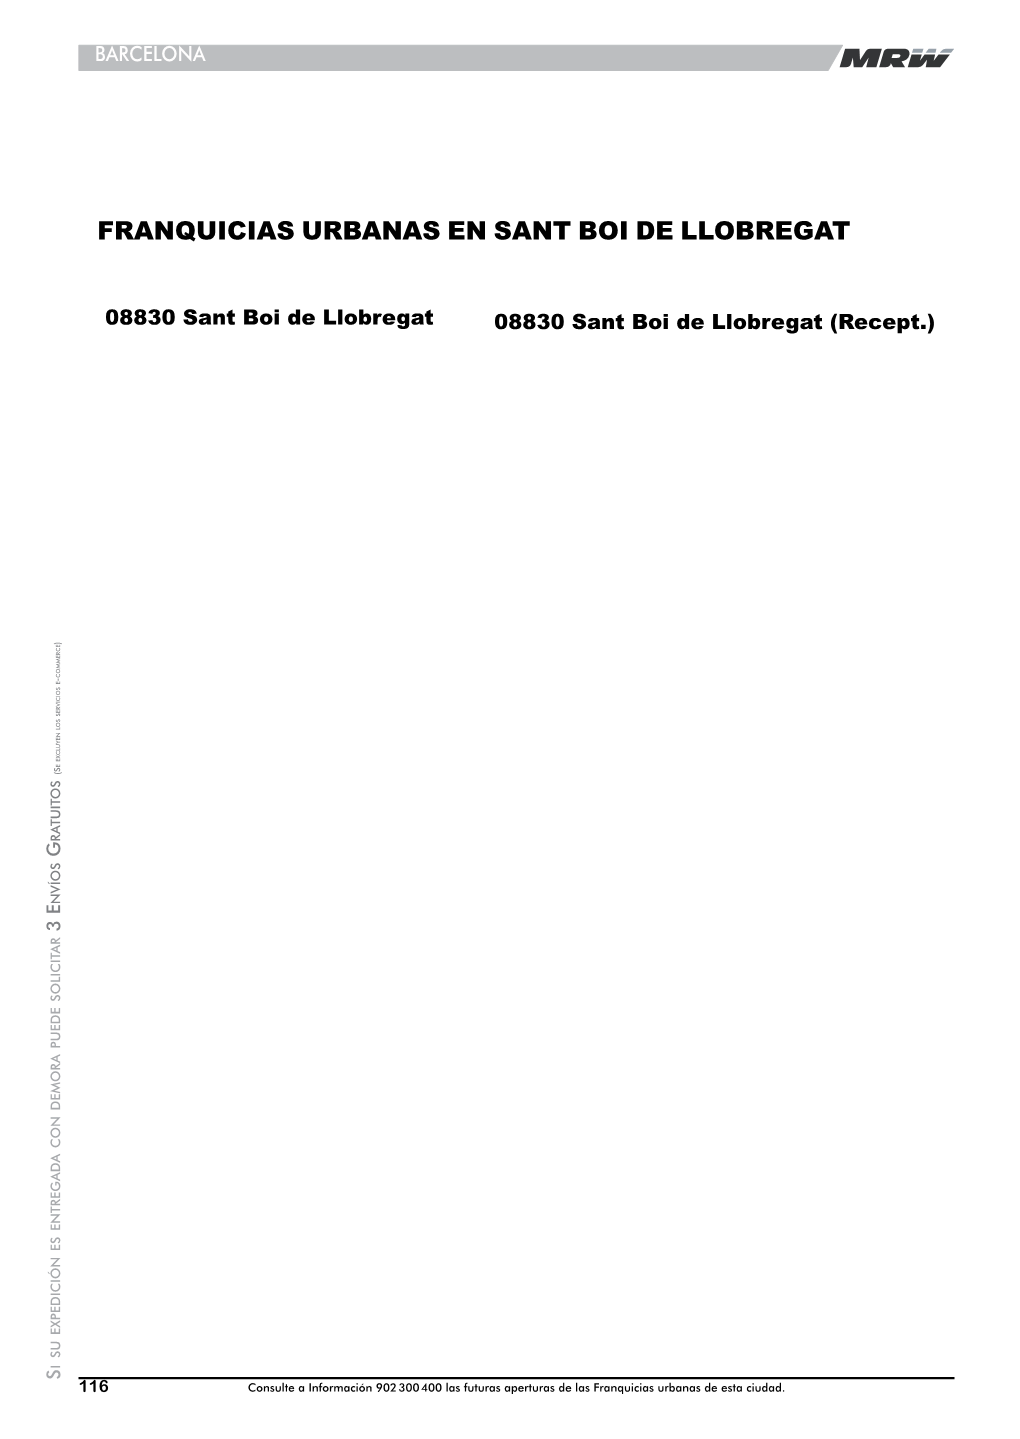 Sant Boi De Llobregat (Recept.) 08830 Santboidellobregat Ranquicias Urbanas Deestaciudad